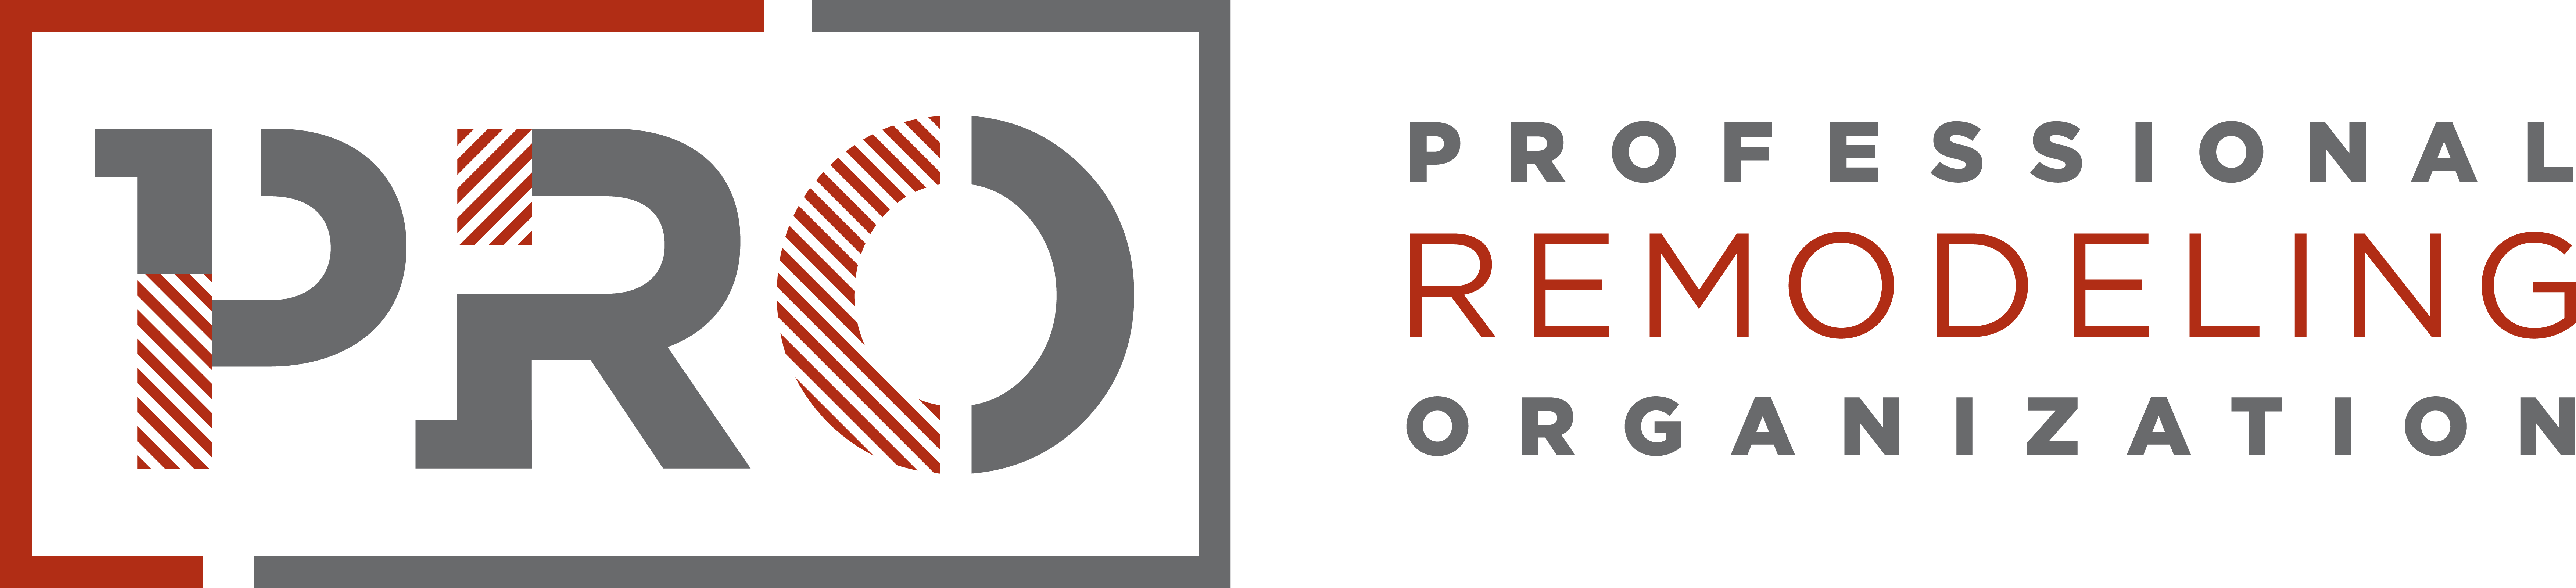 Professional Remodeling Organization Logo